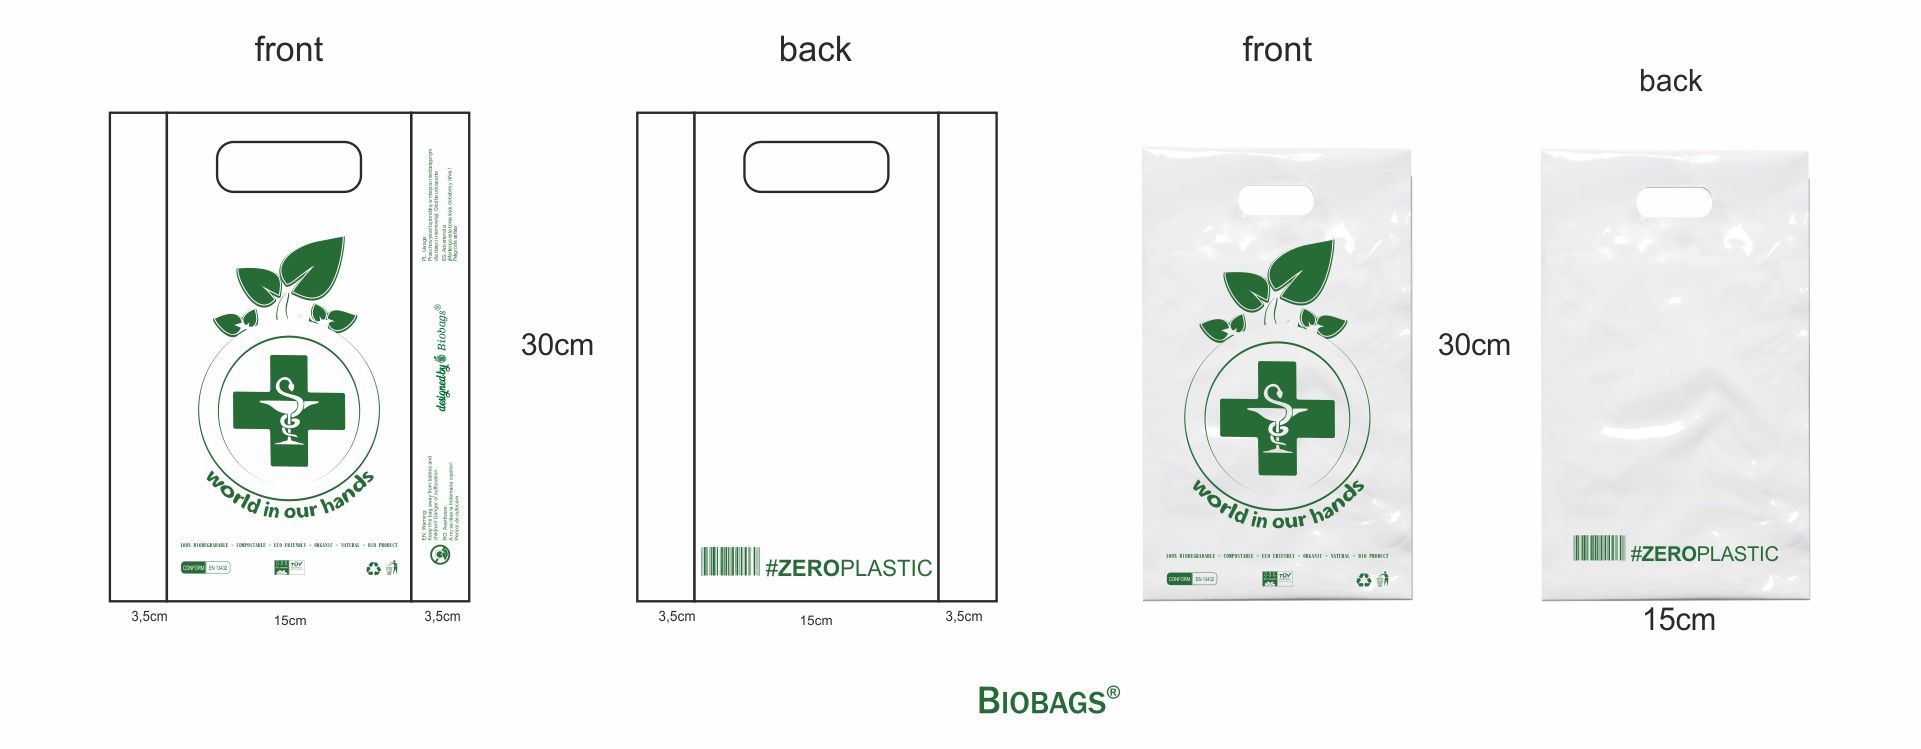 Farmacy - Biobags template 15x30cm